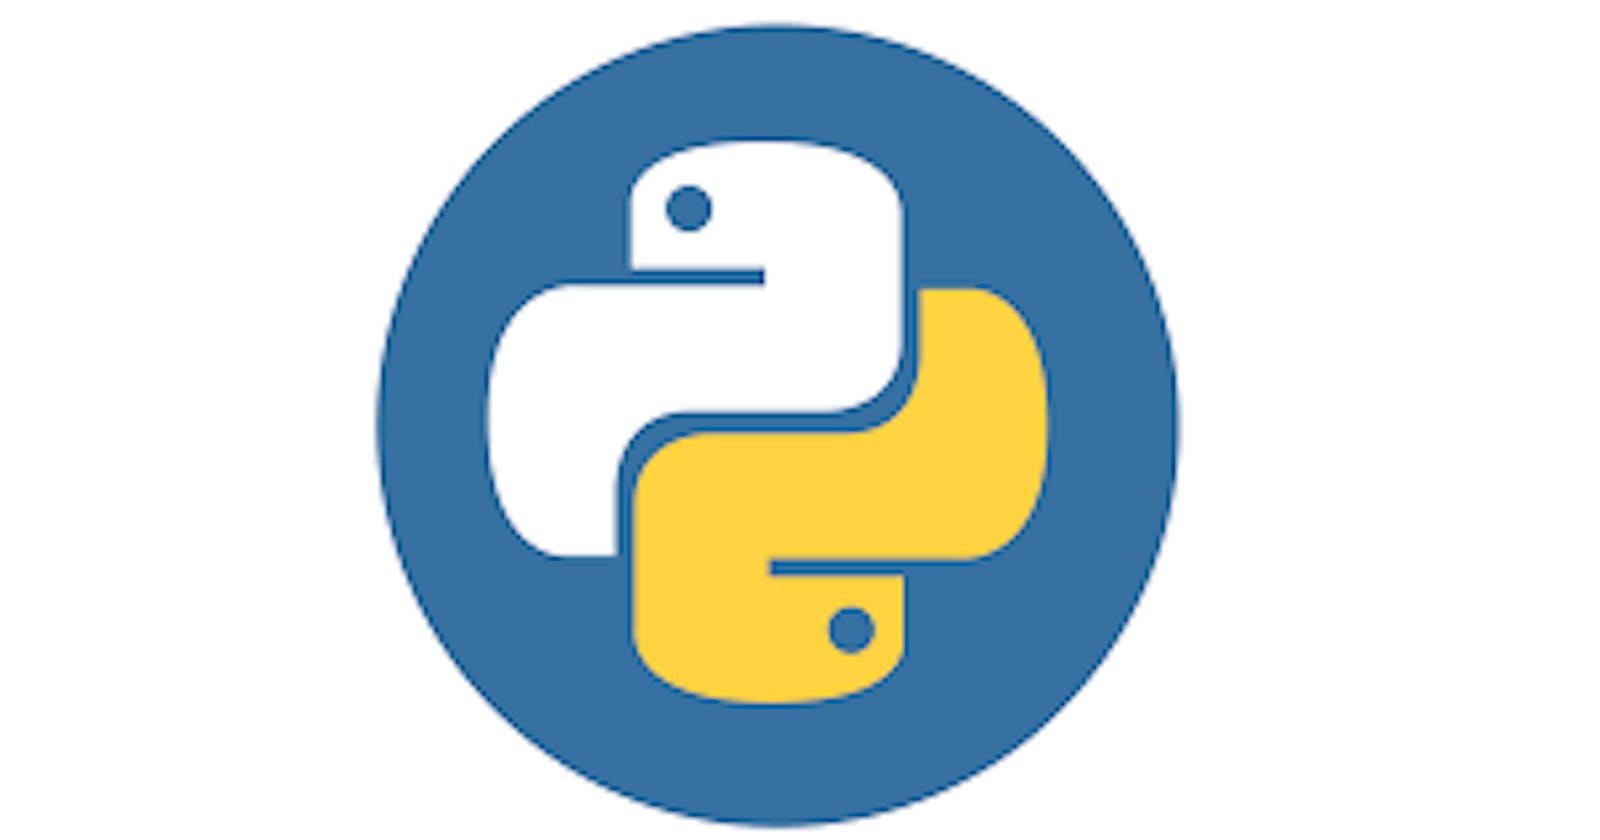 Introduction To Socket Programming Using Python